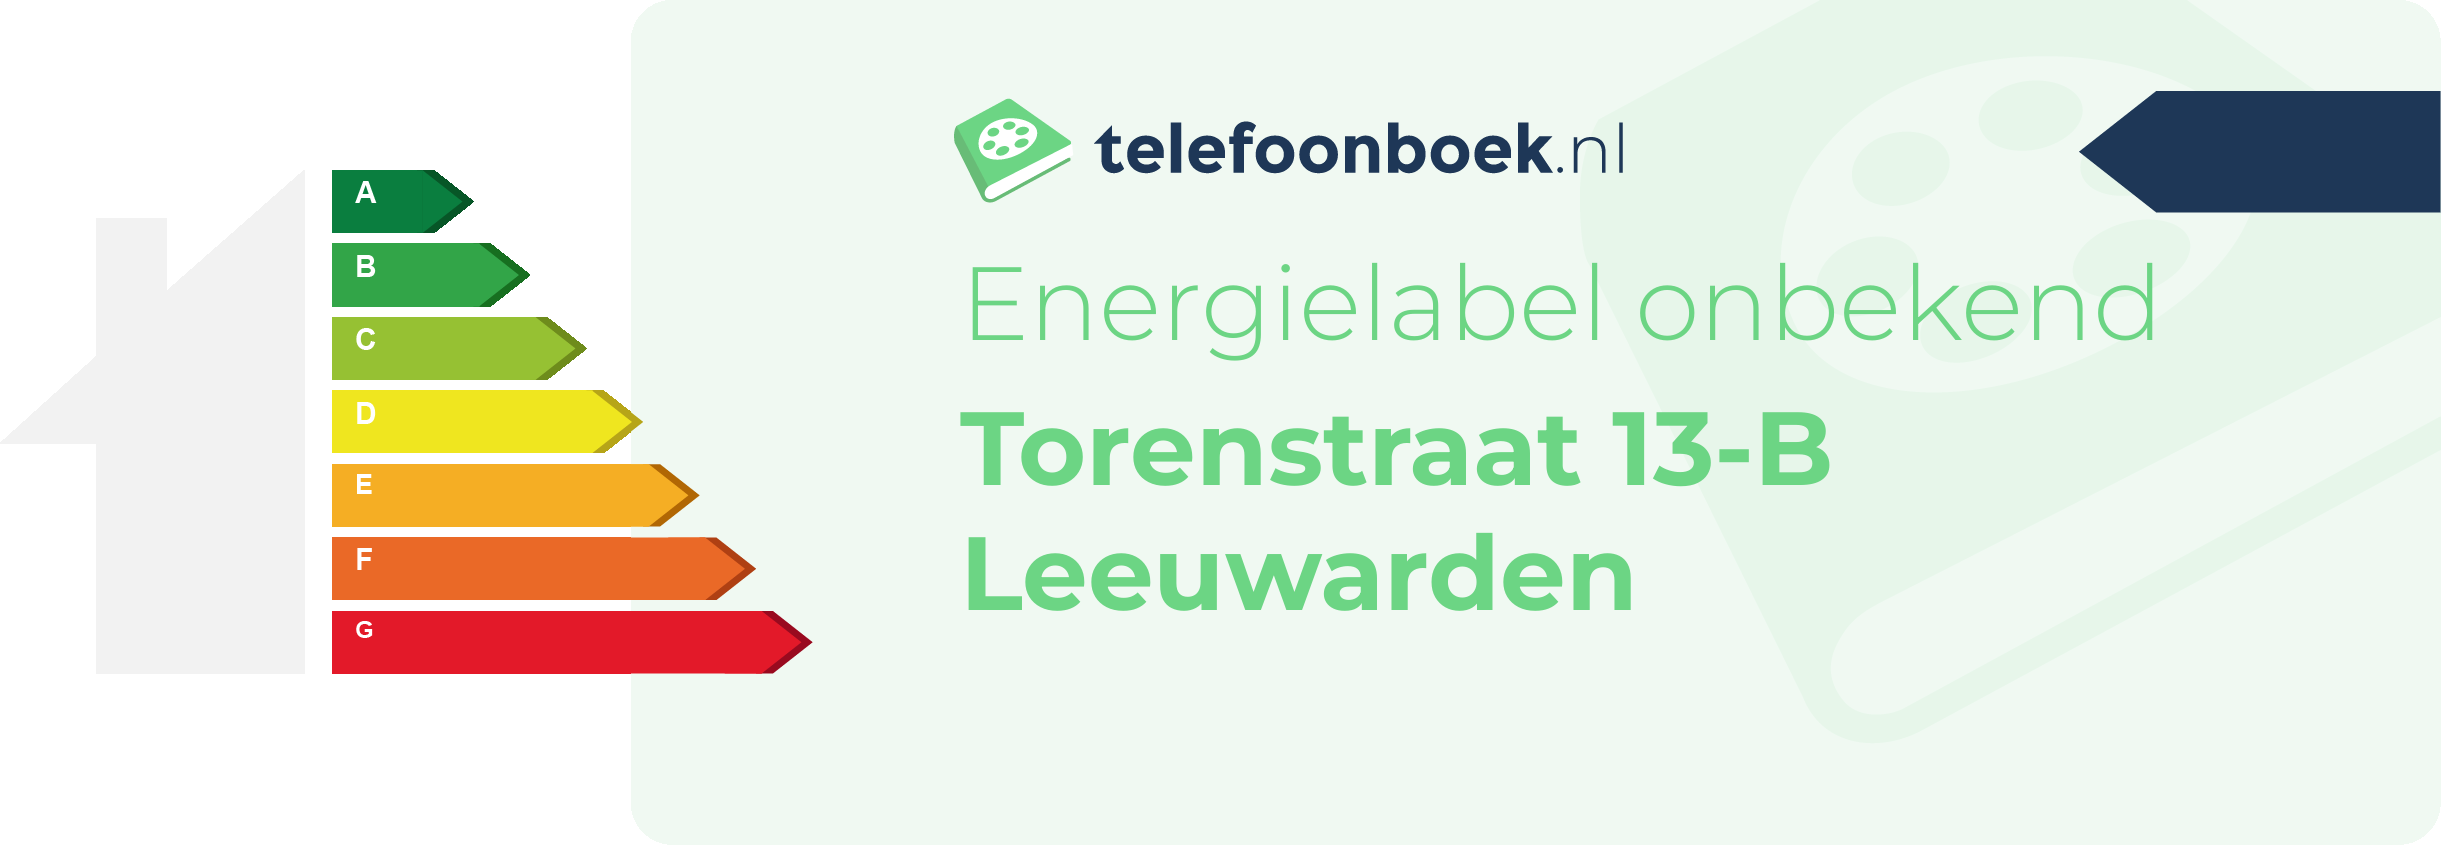 Energielabel Torenstraat 13-B Leeuwarden